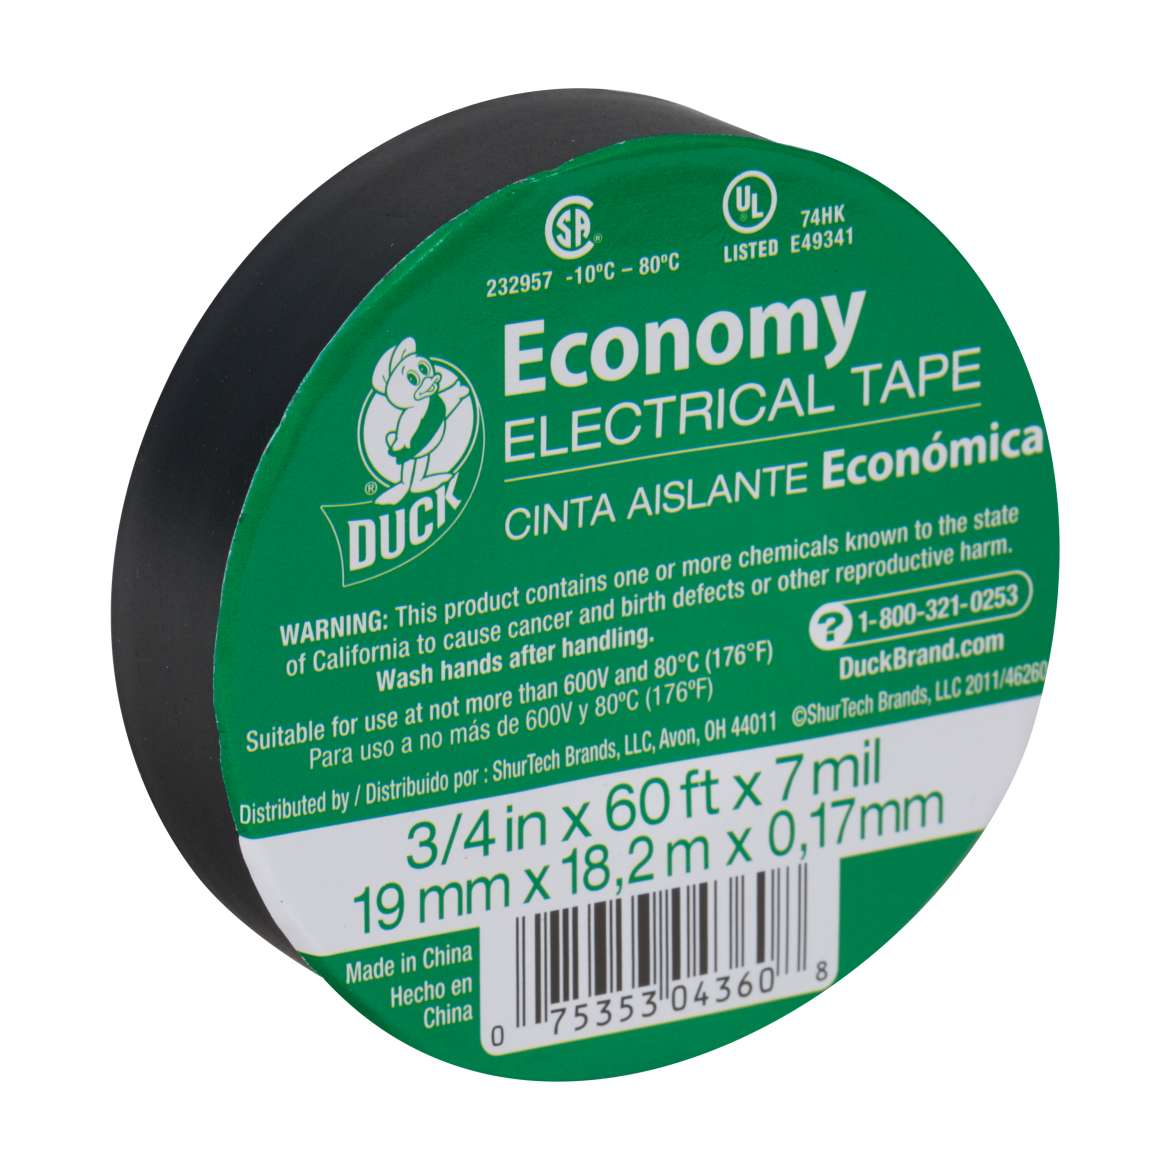 Economy Electrical Tape Image